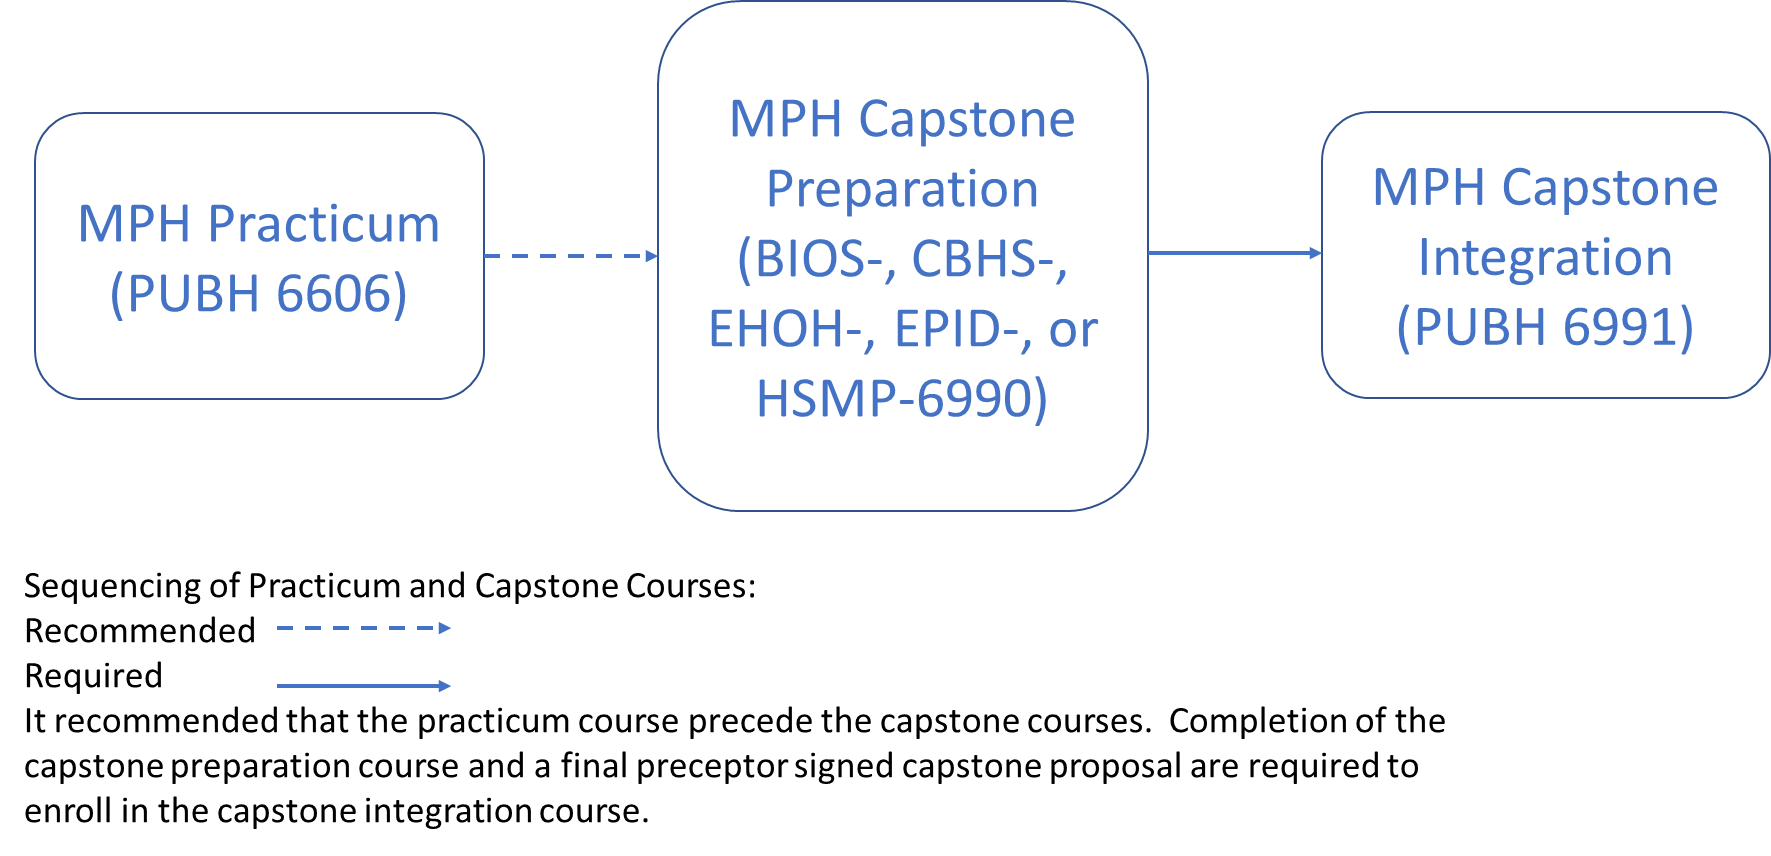 MPH Capstone infographic